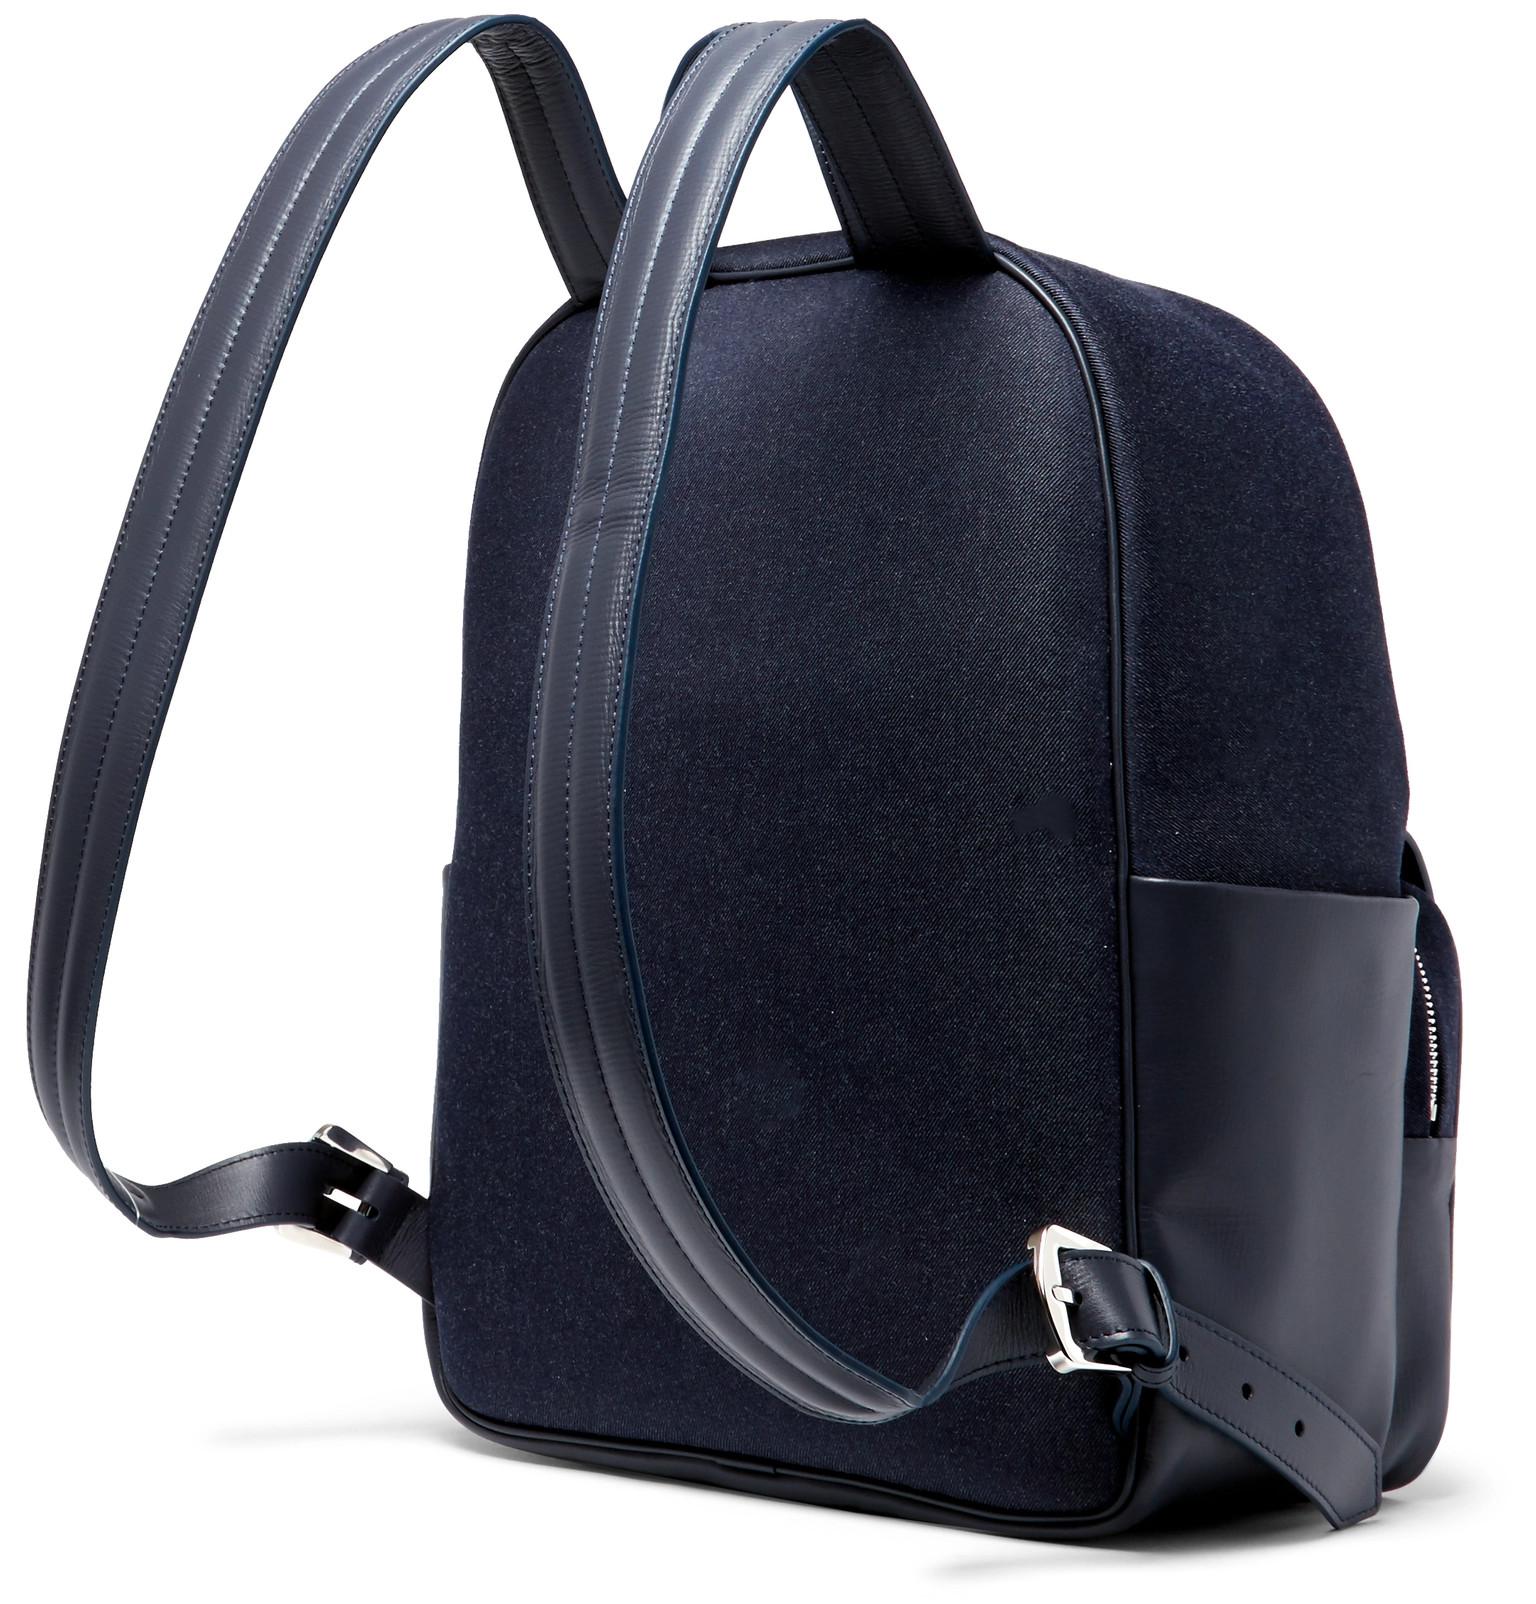 2023 new fashion Loro bag lp backpack piana backpack travel